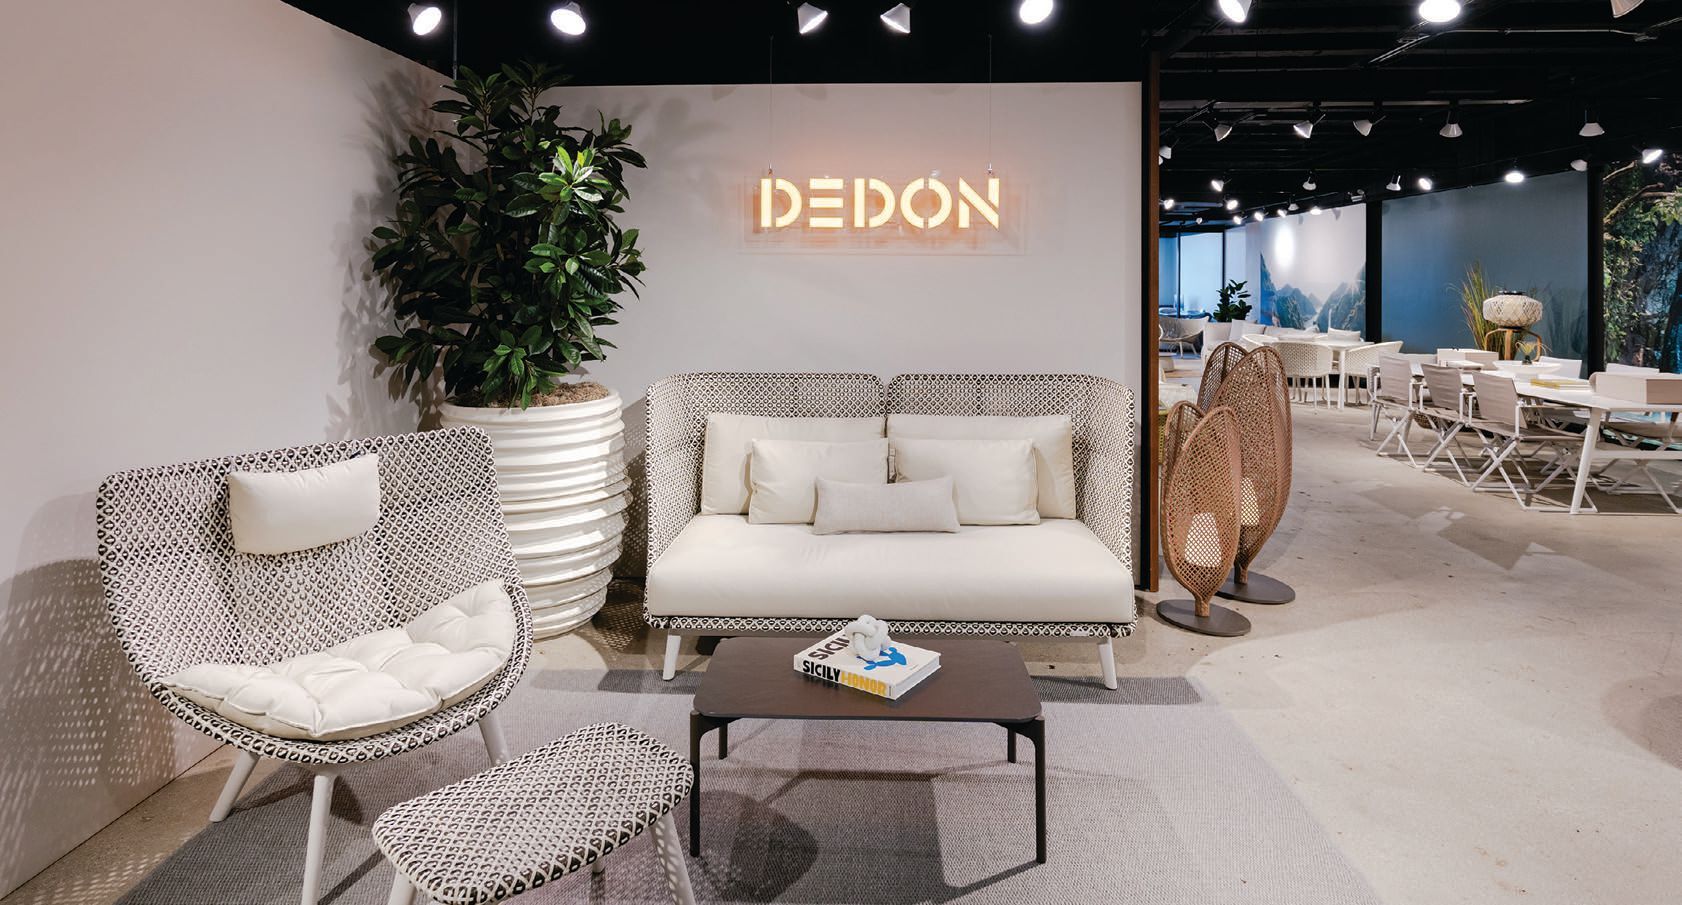 DEDON’s showroom at theMART showcases their premium outdoor furniture PHOTO BY: JOE U PHOTO